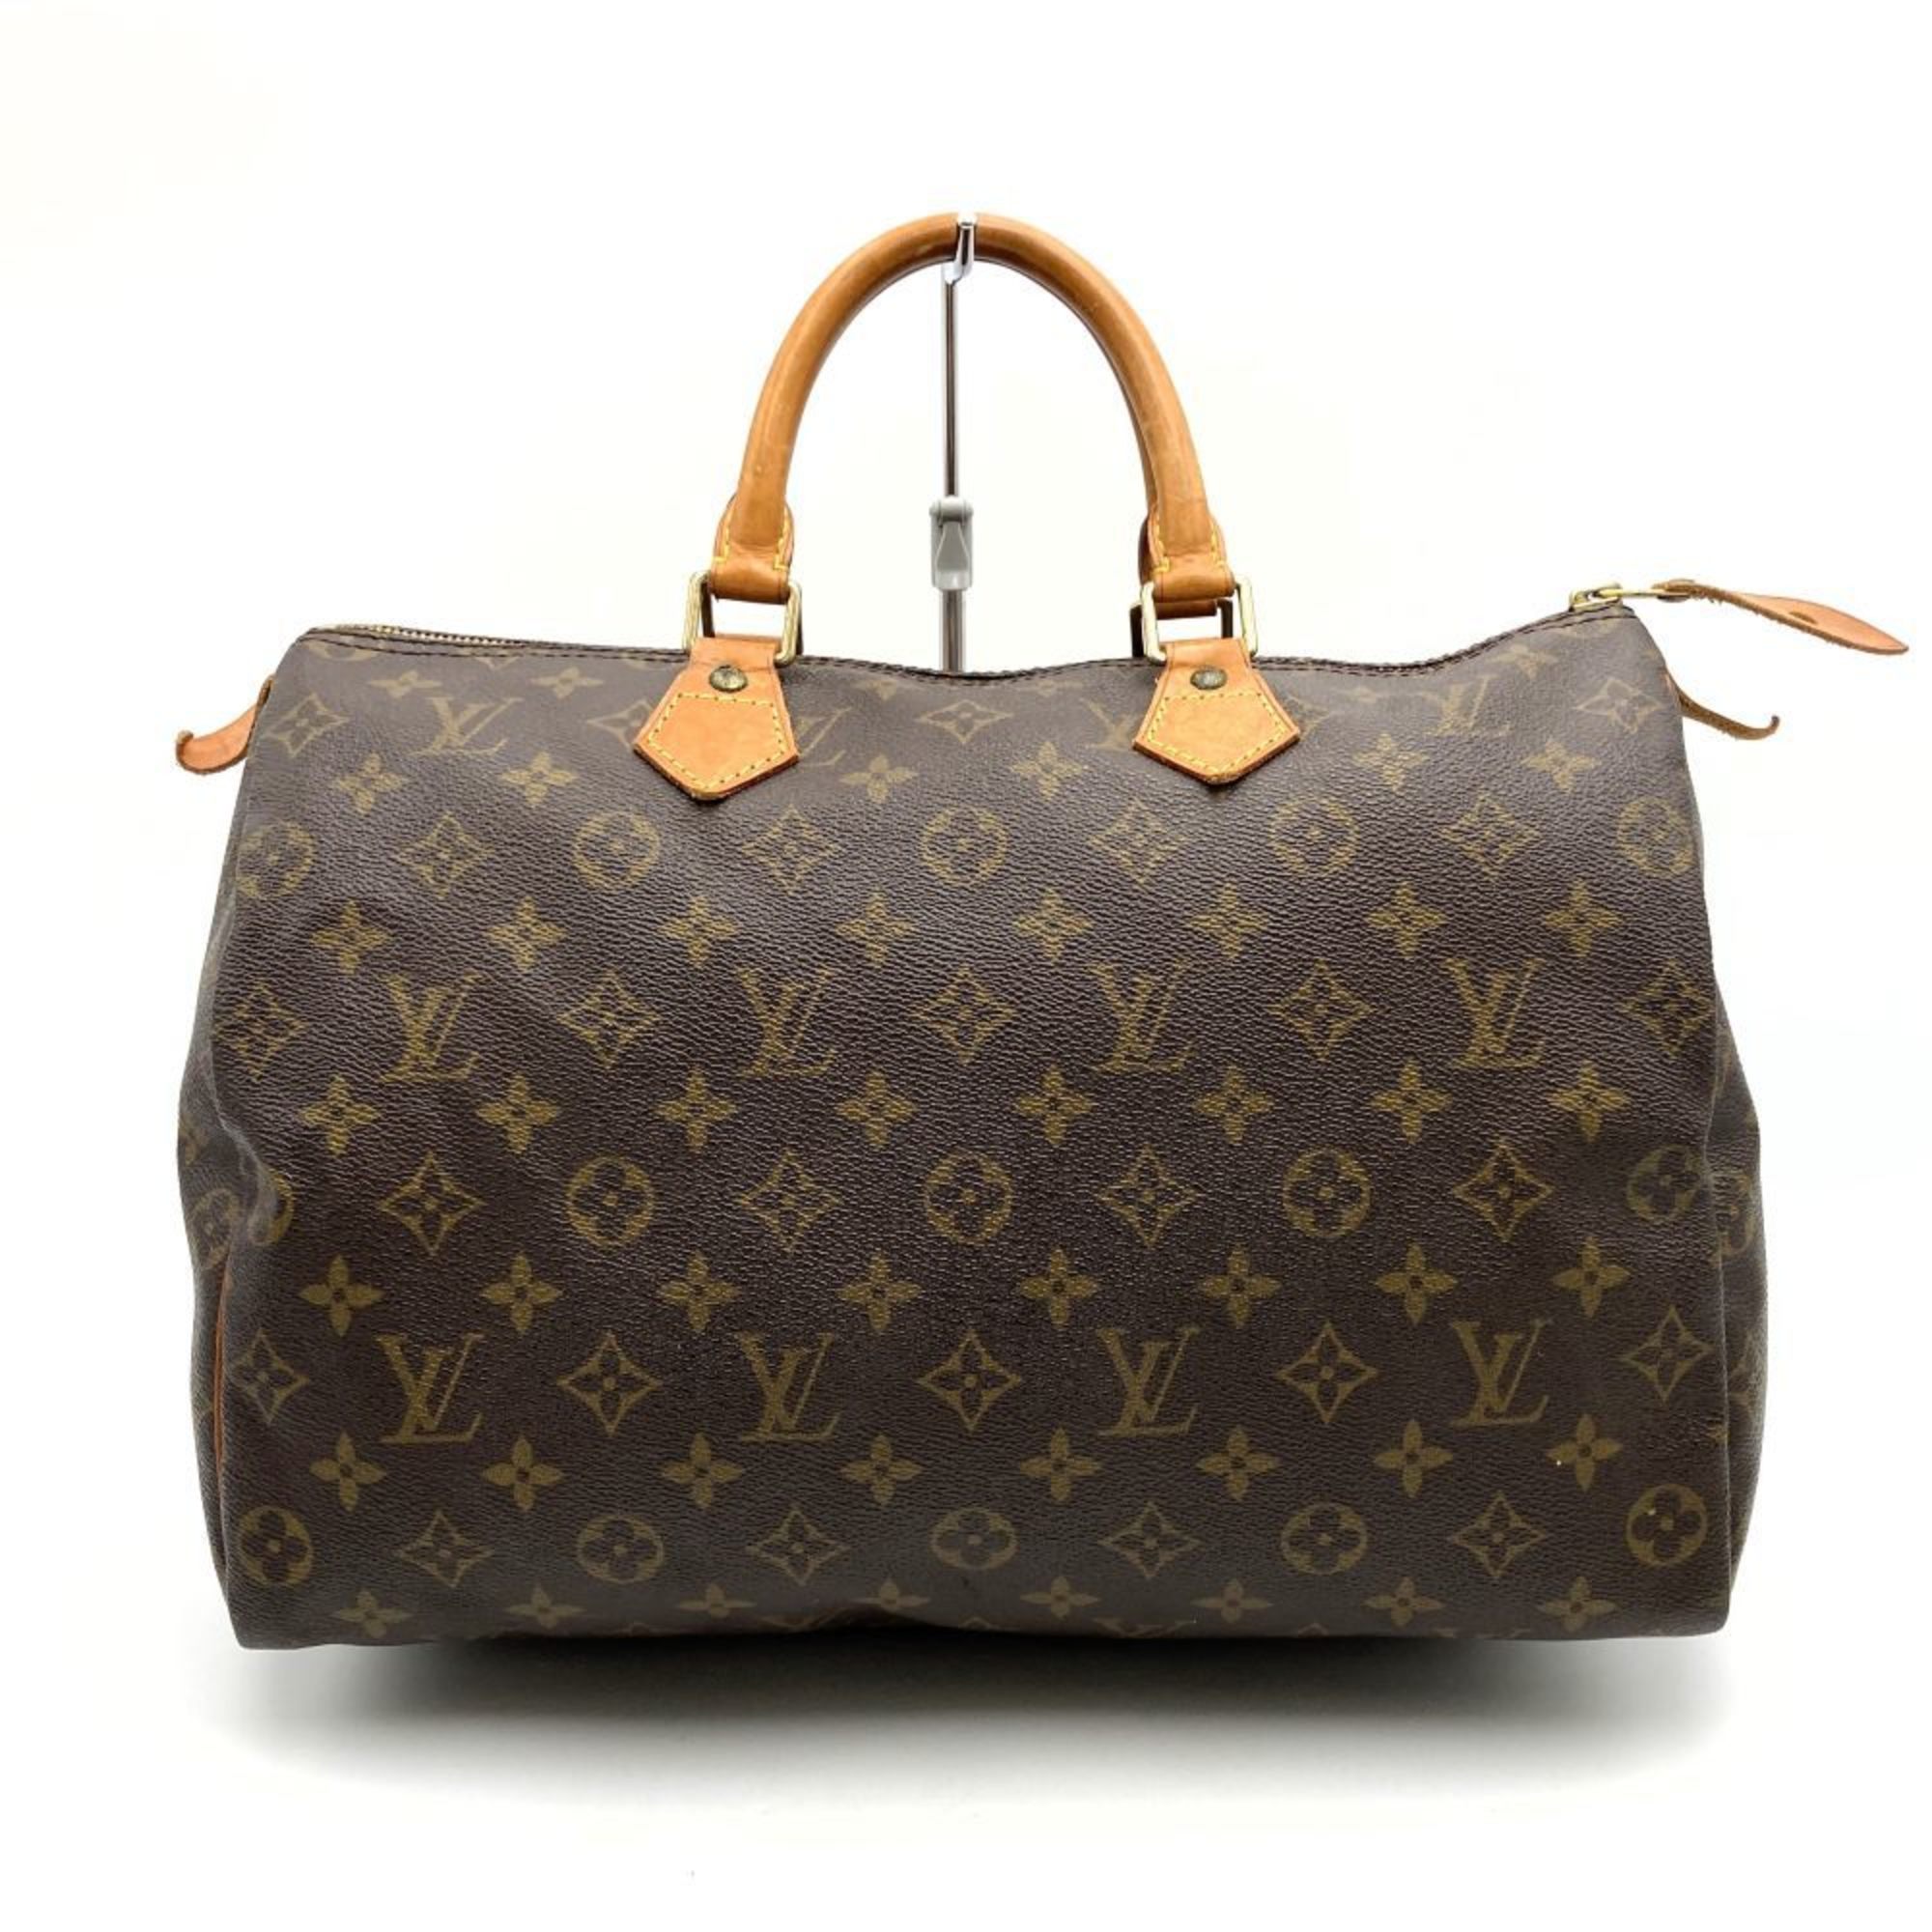 Louis Vuitton M41524 Speedy 35 (old) Handbag Boston Brown Monogram Women's LOUIS VUITTON